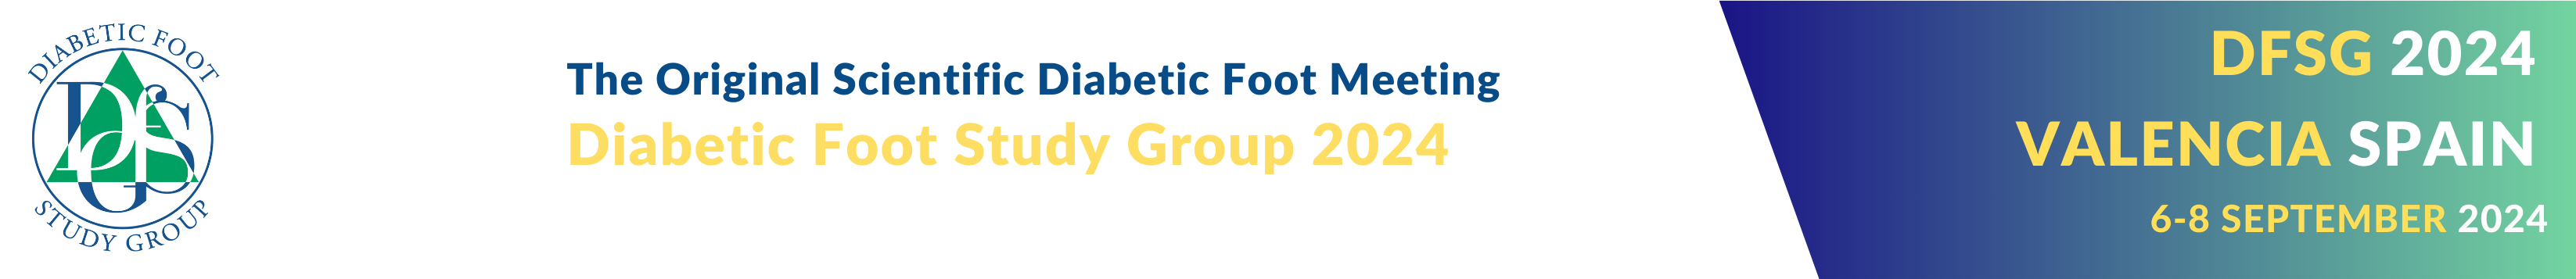 The Original Scientific Diabetic Foot Meeting - DFSG 2024